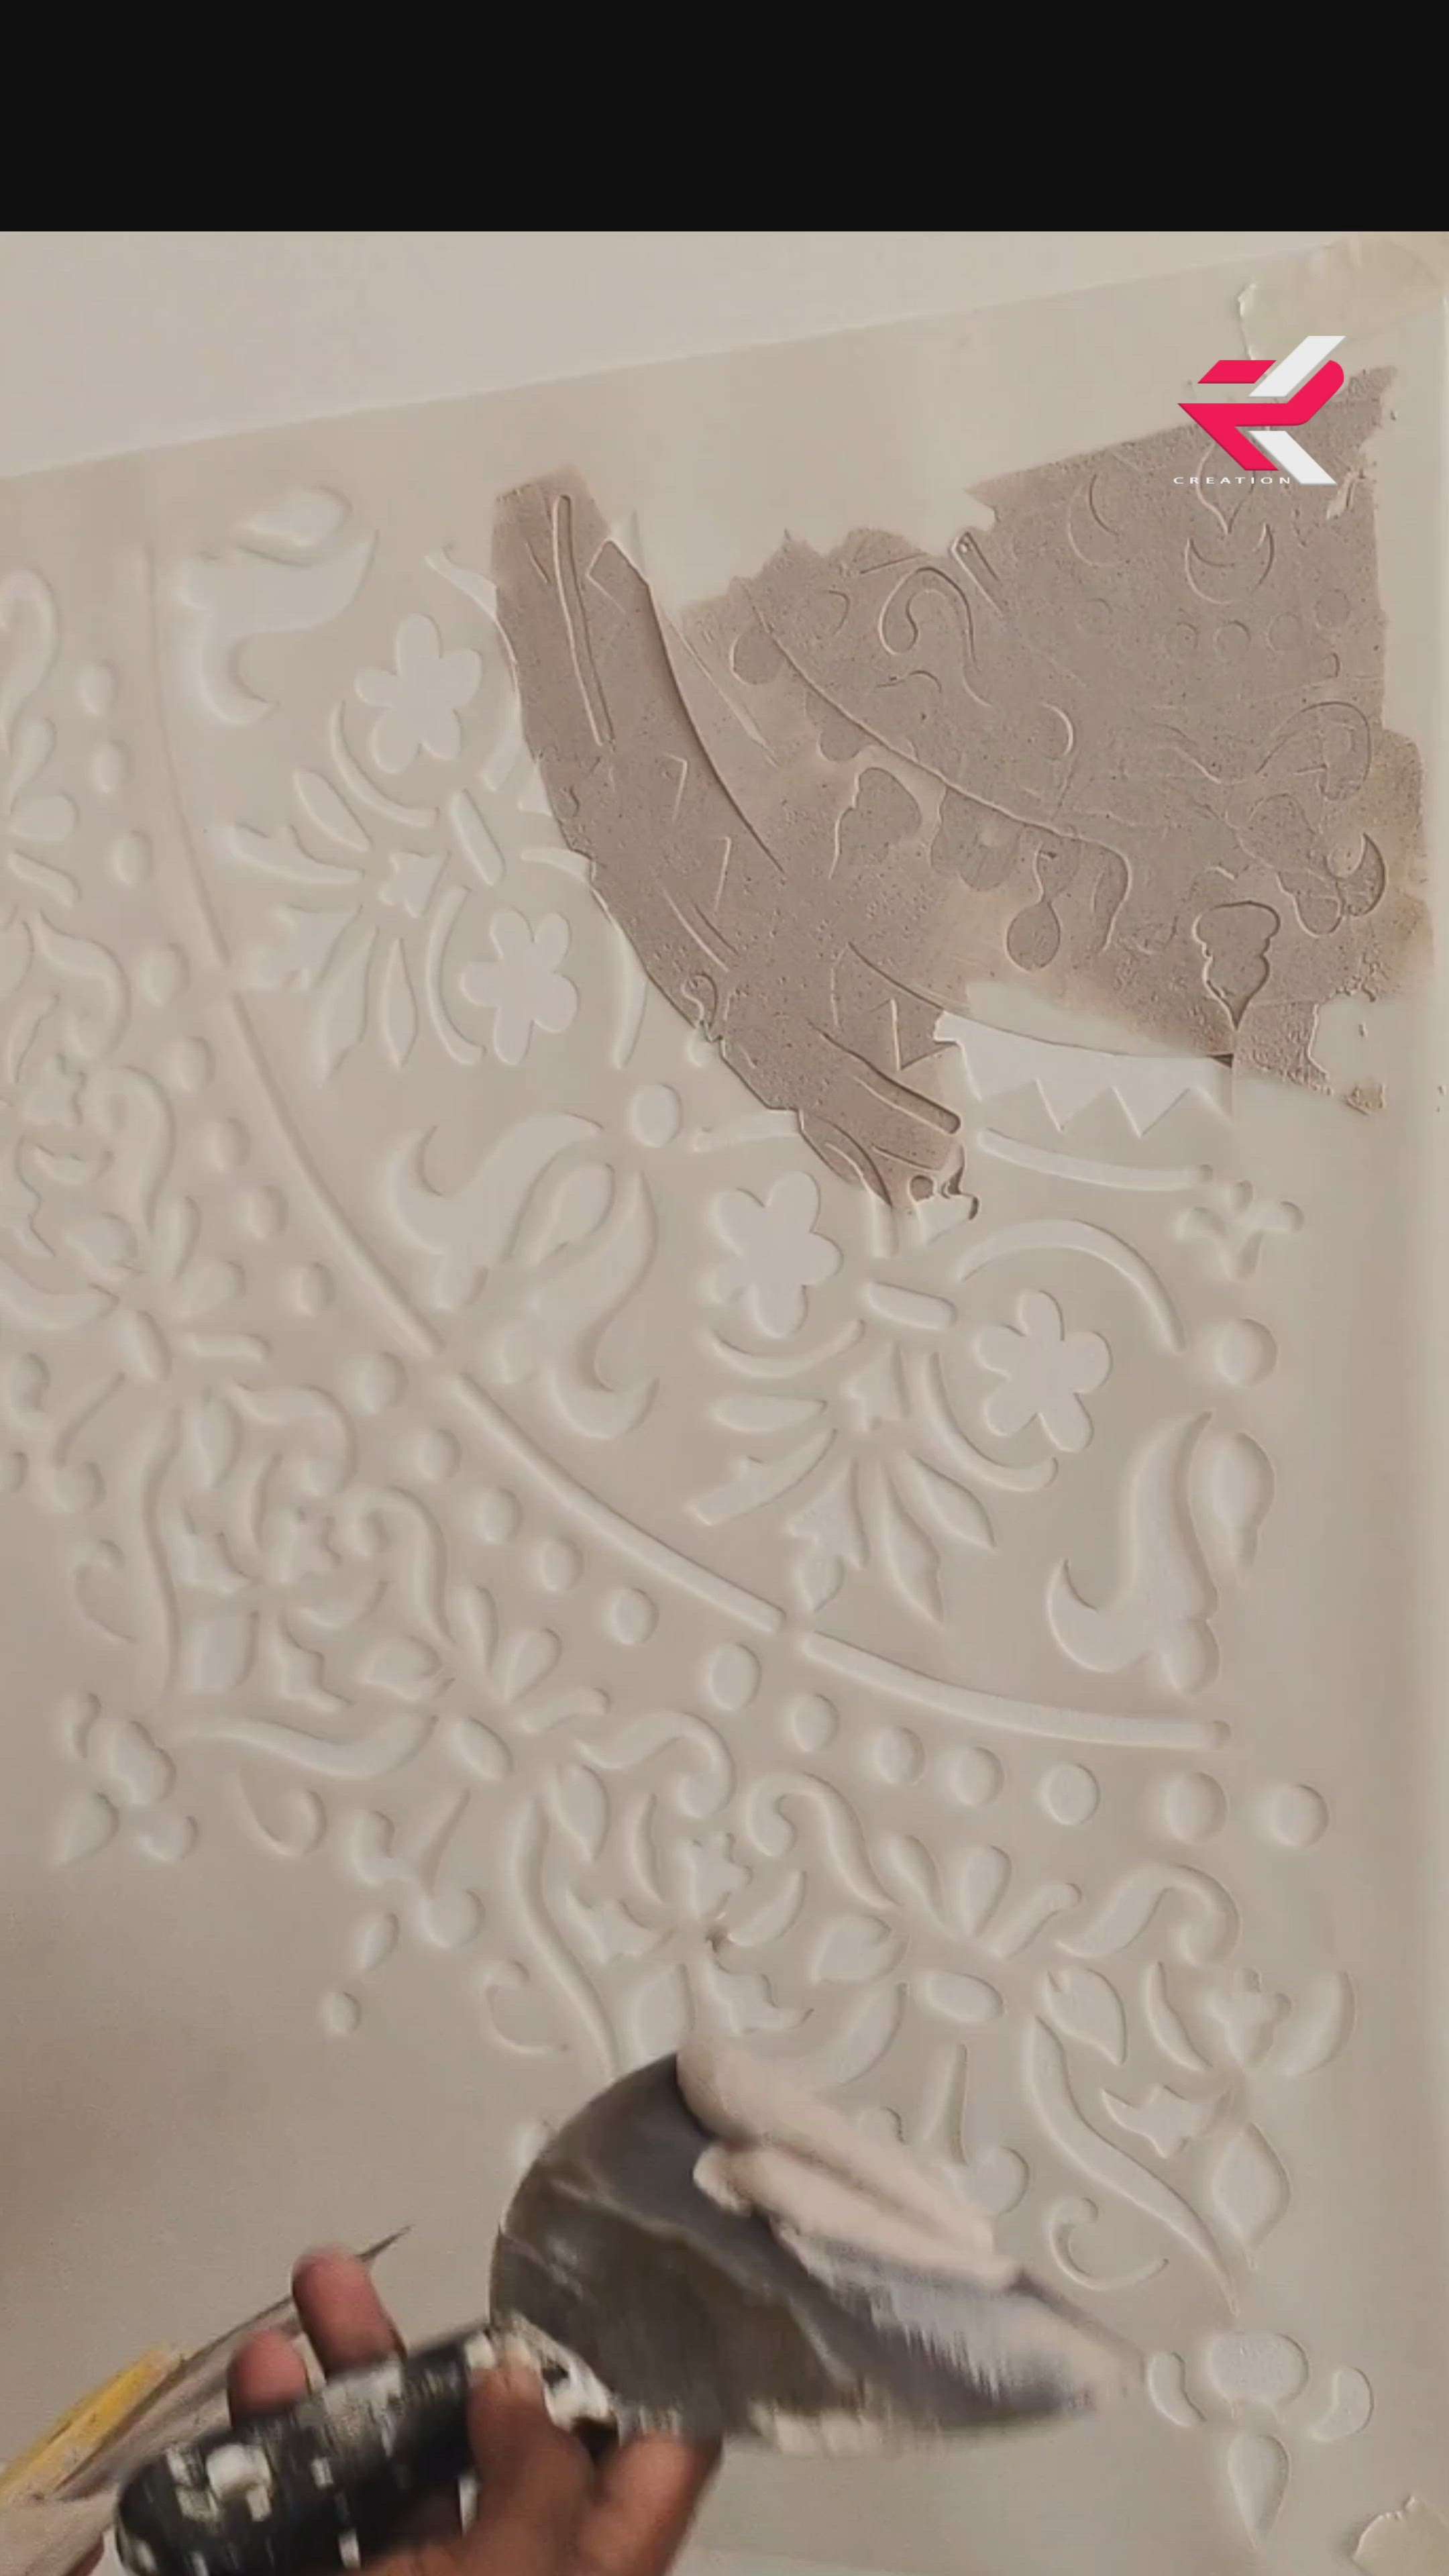 Bedroom wall stencil art
 #stencilsdesigns  #TexturePainting  #WallDecors  #WallDesigns  #costomized  #qouality  #customized_wallpaper  #LivingRoomDecoration  #TexturePainting  #MettalicPainting   #BedroomDecor